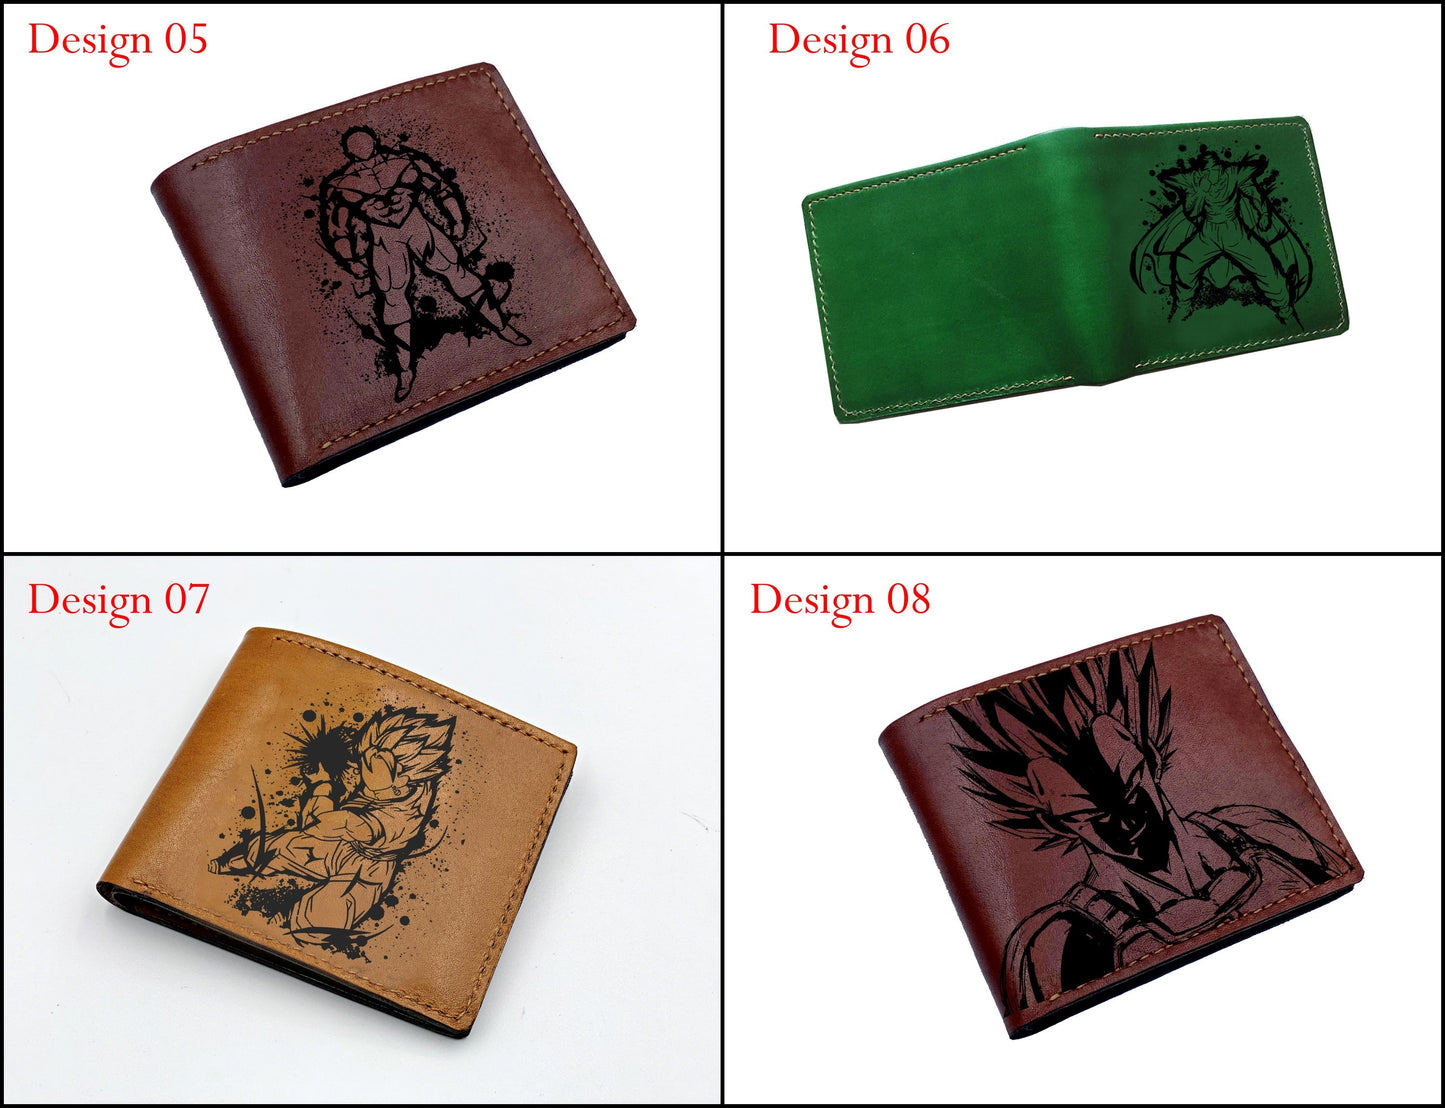 Mayan Corner - Super saiyan transform art, custom leather men wallet, son goku dragon ball wallet, leather gift for him, anime characters present